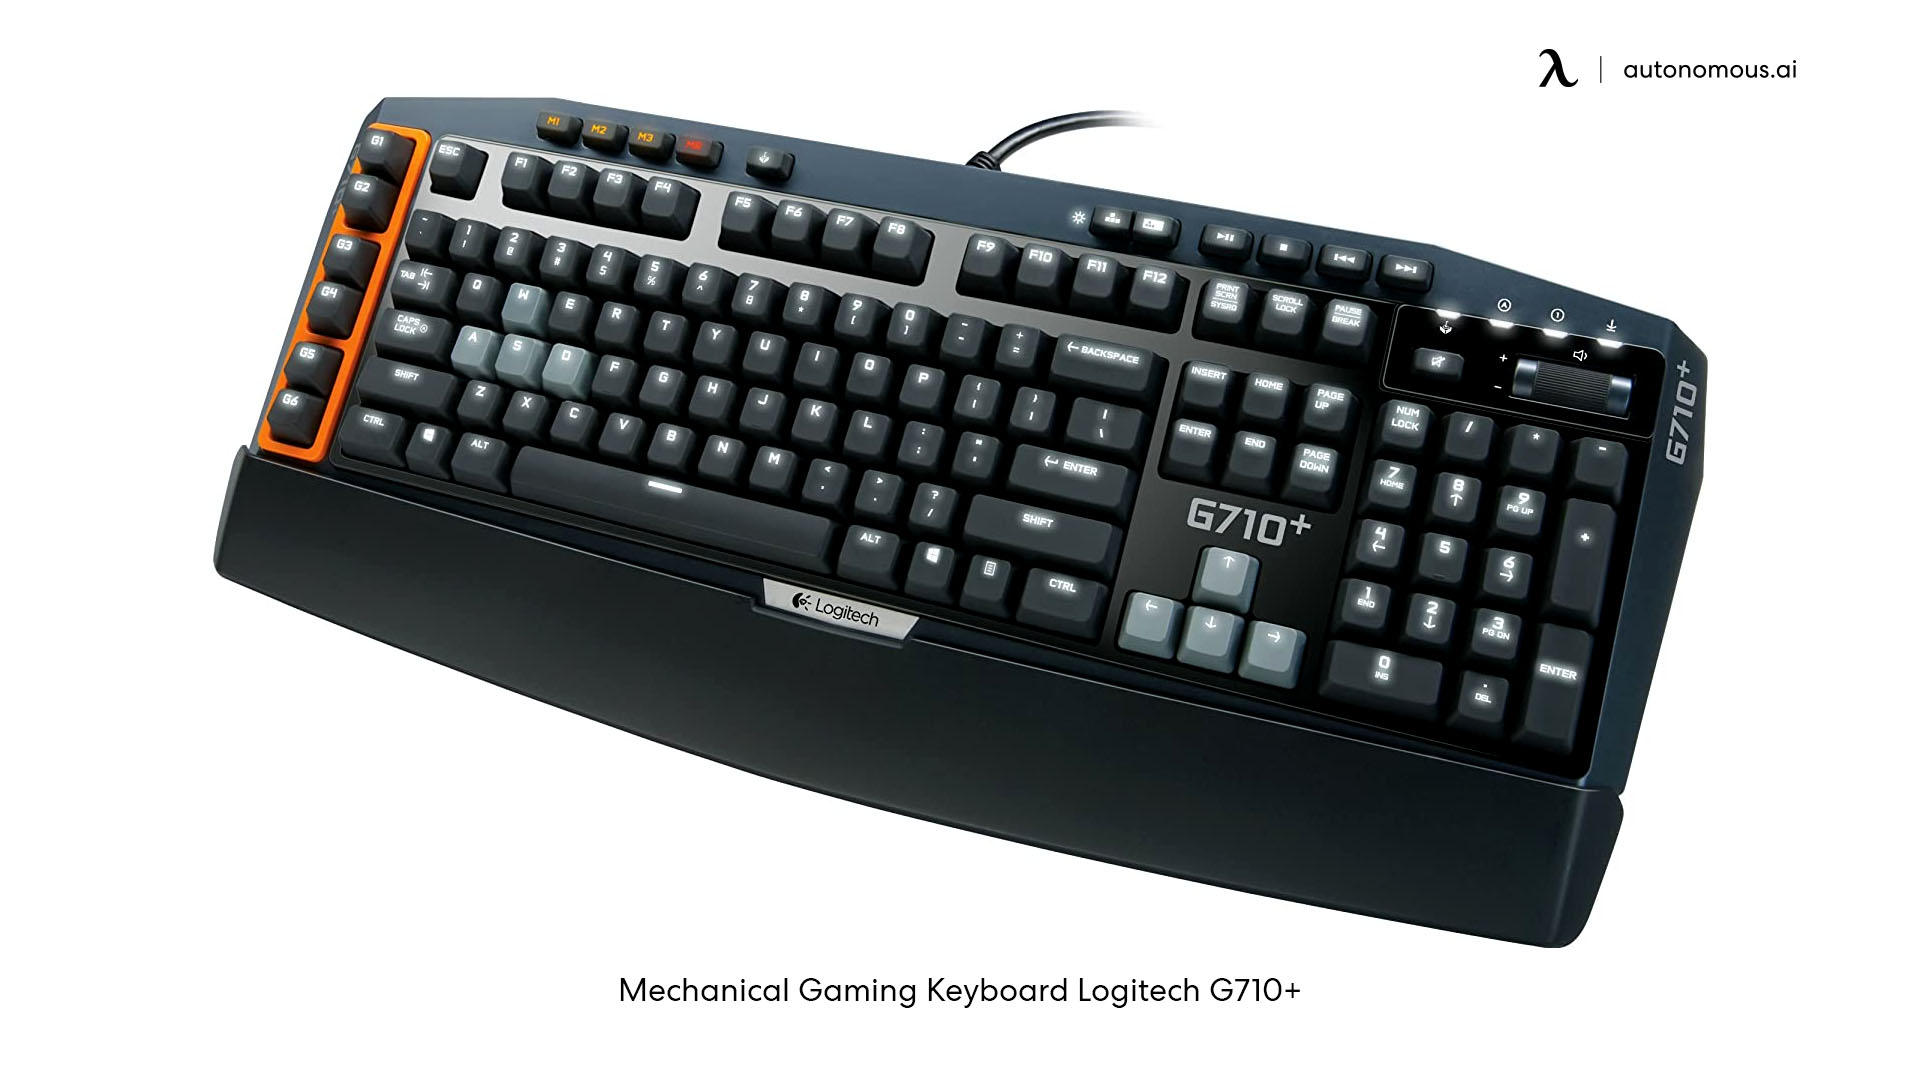 Mechanical Gaming Keyboard Logitech G710+